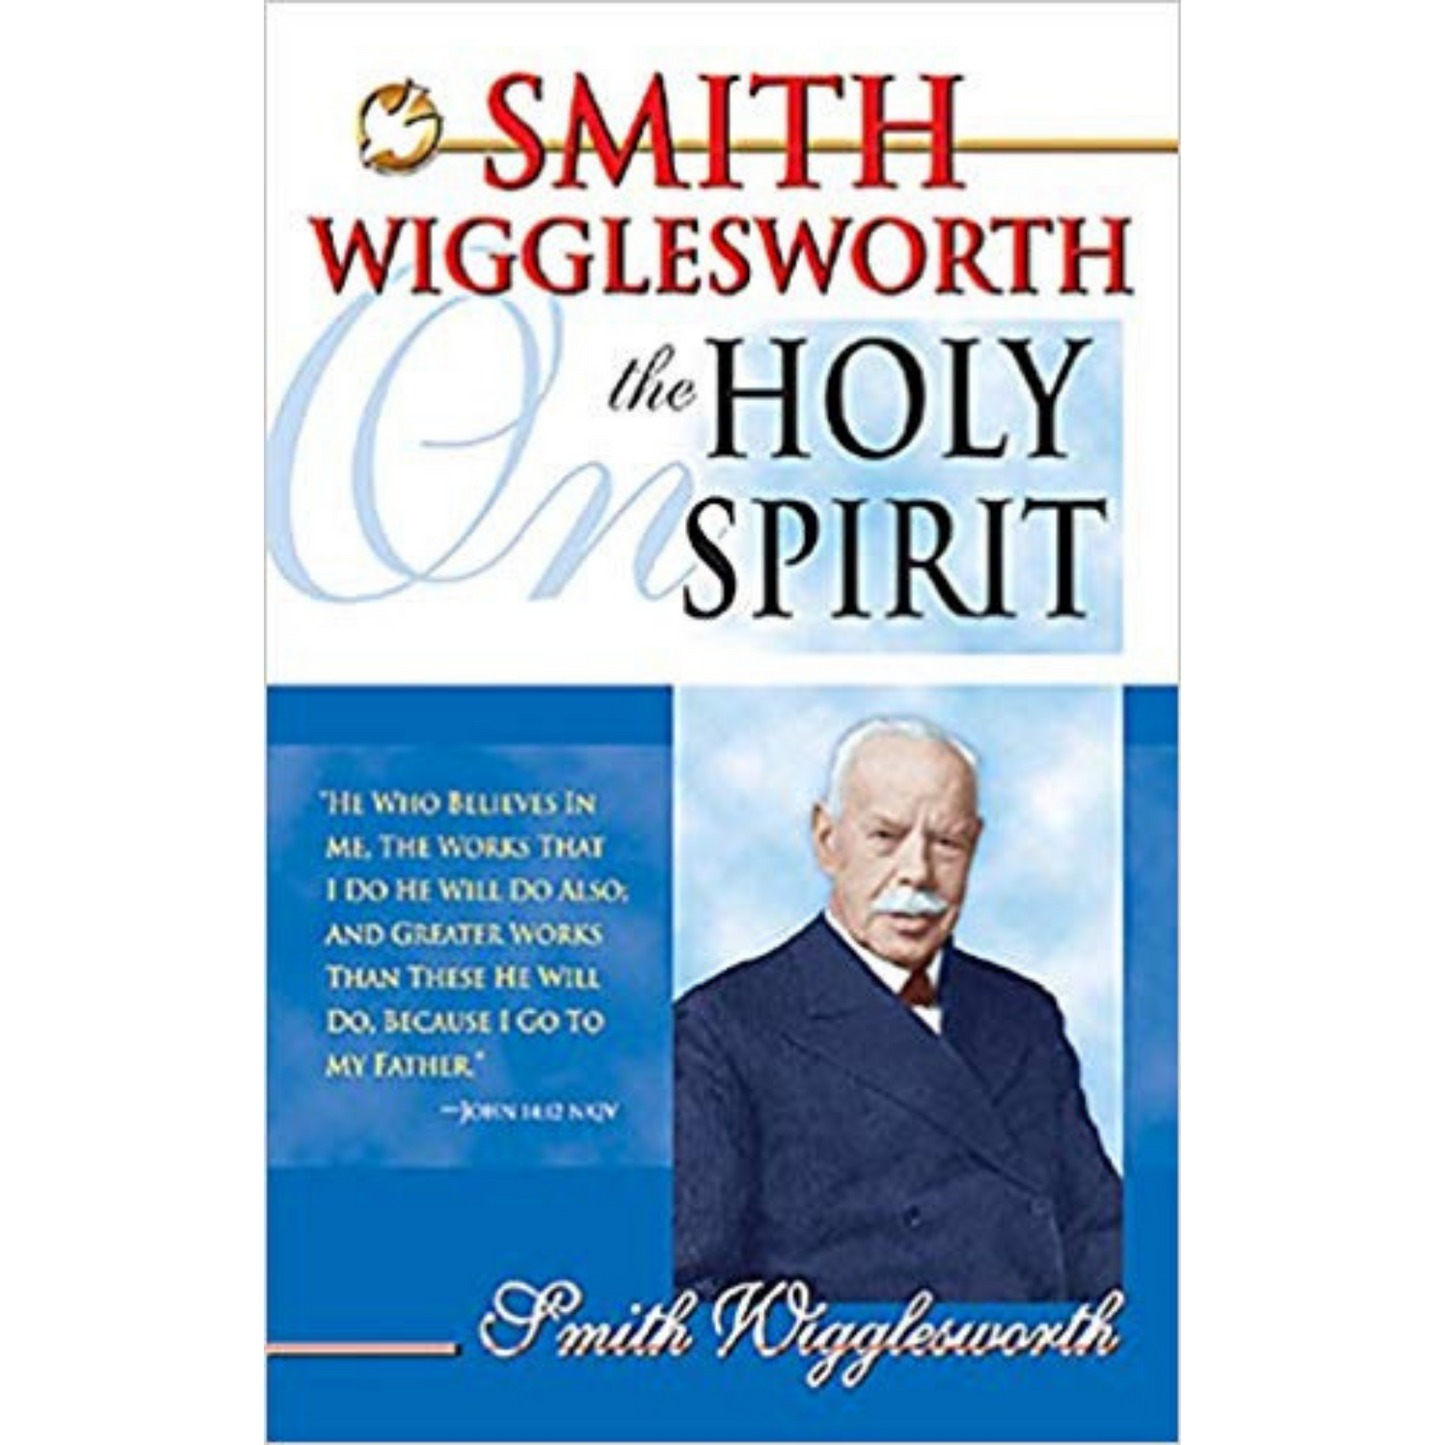 Smith Wigglesworth On The Holy Spirit